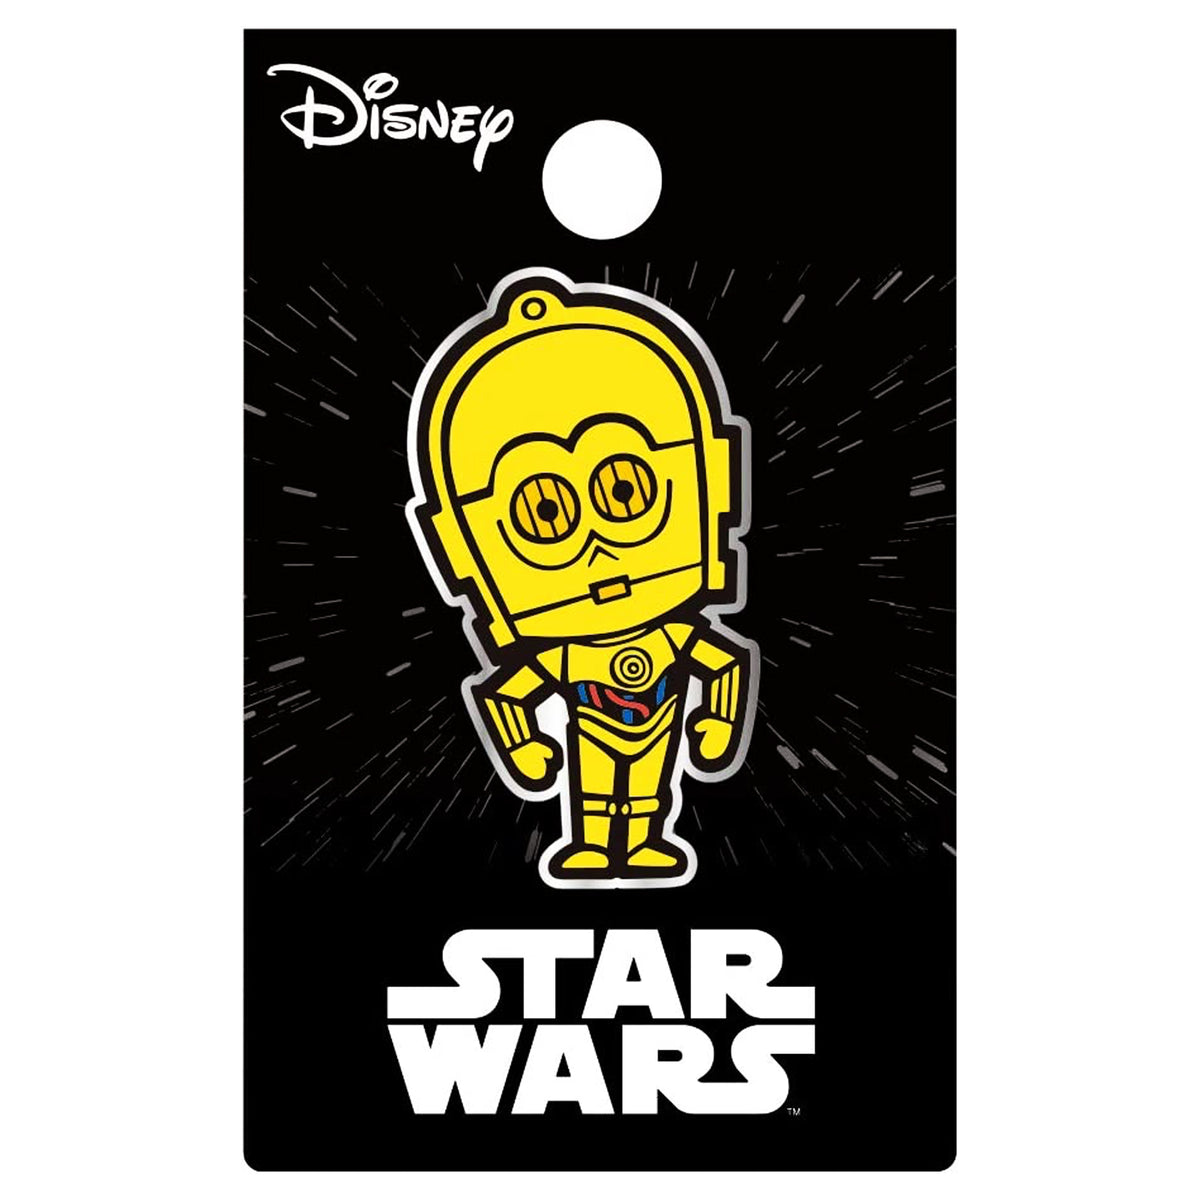 Star Wars C-3PO Collectible Enamel Pin